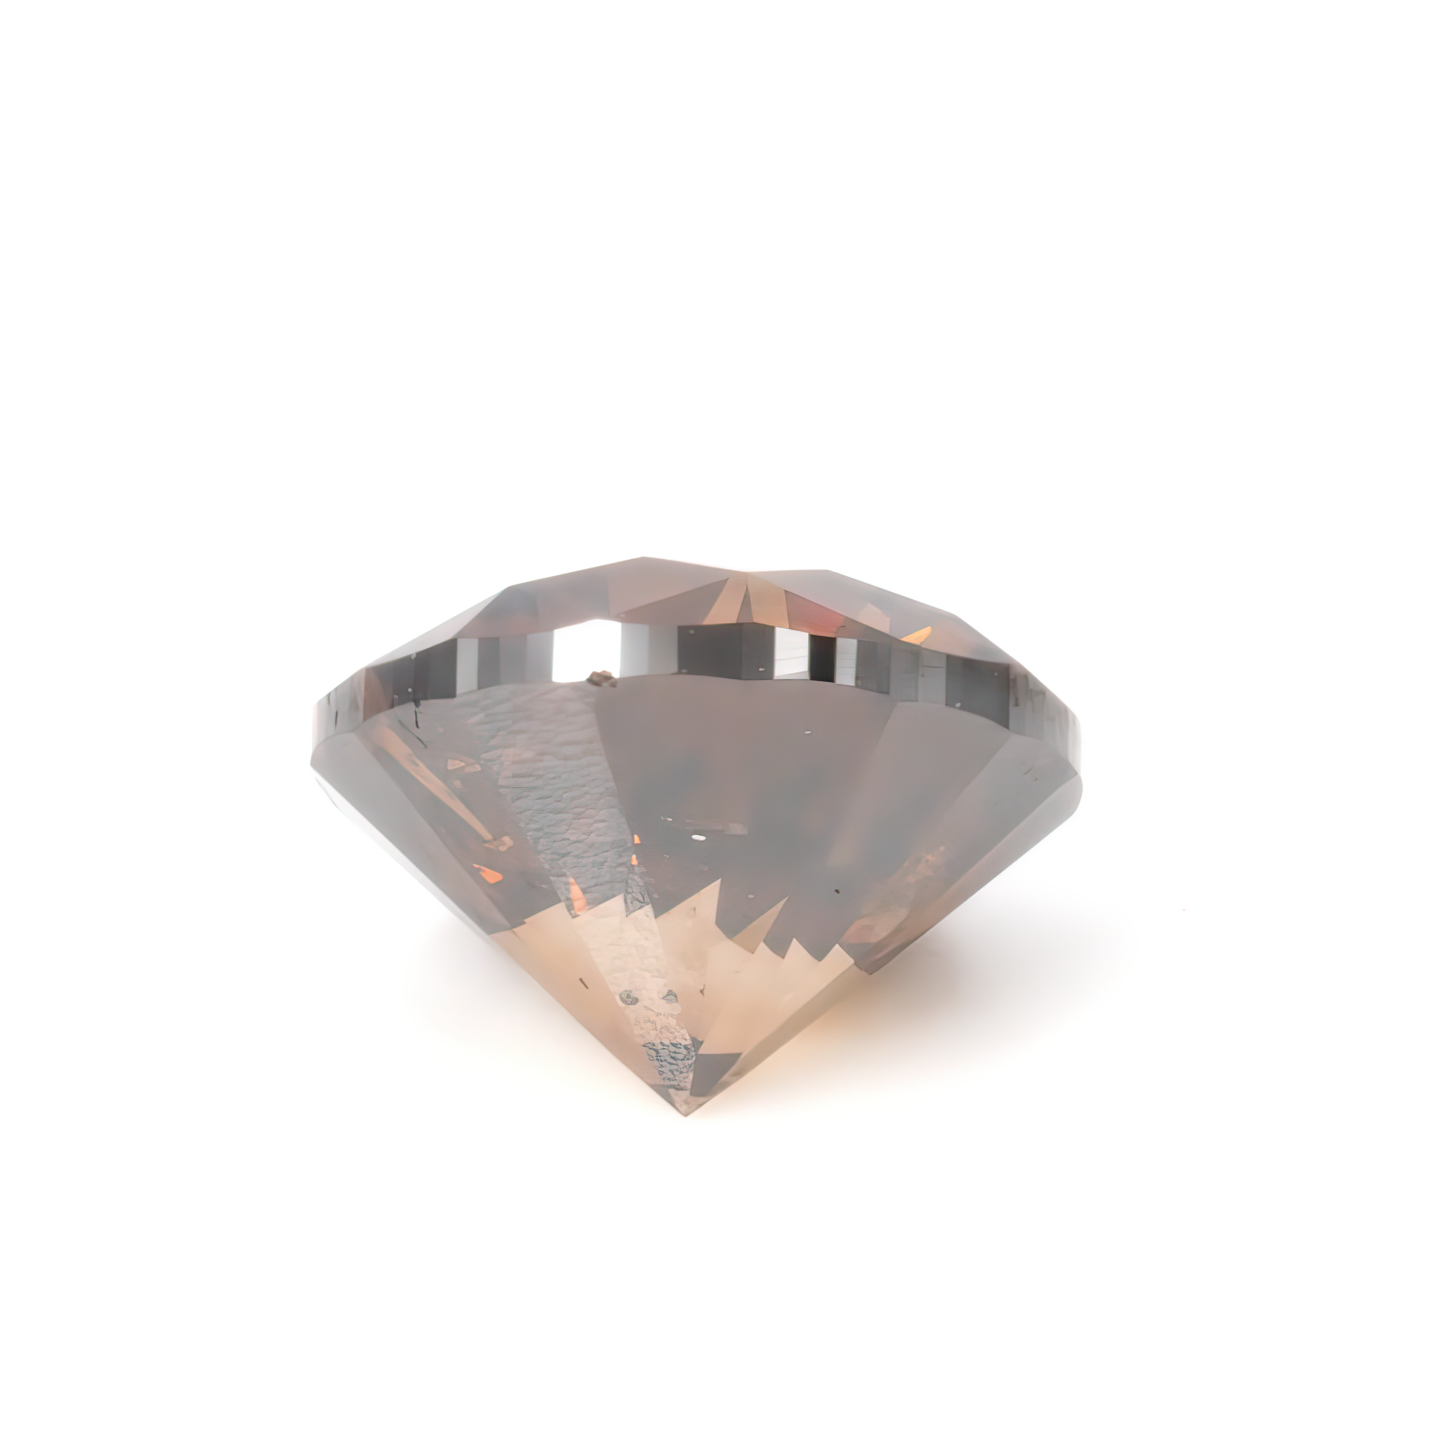 2.32ct Orangy Brown, Round Diamond - 8.04 - 8.11 x 5.32mm